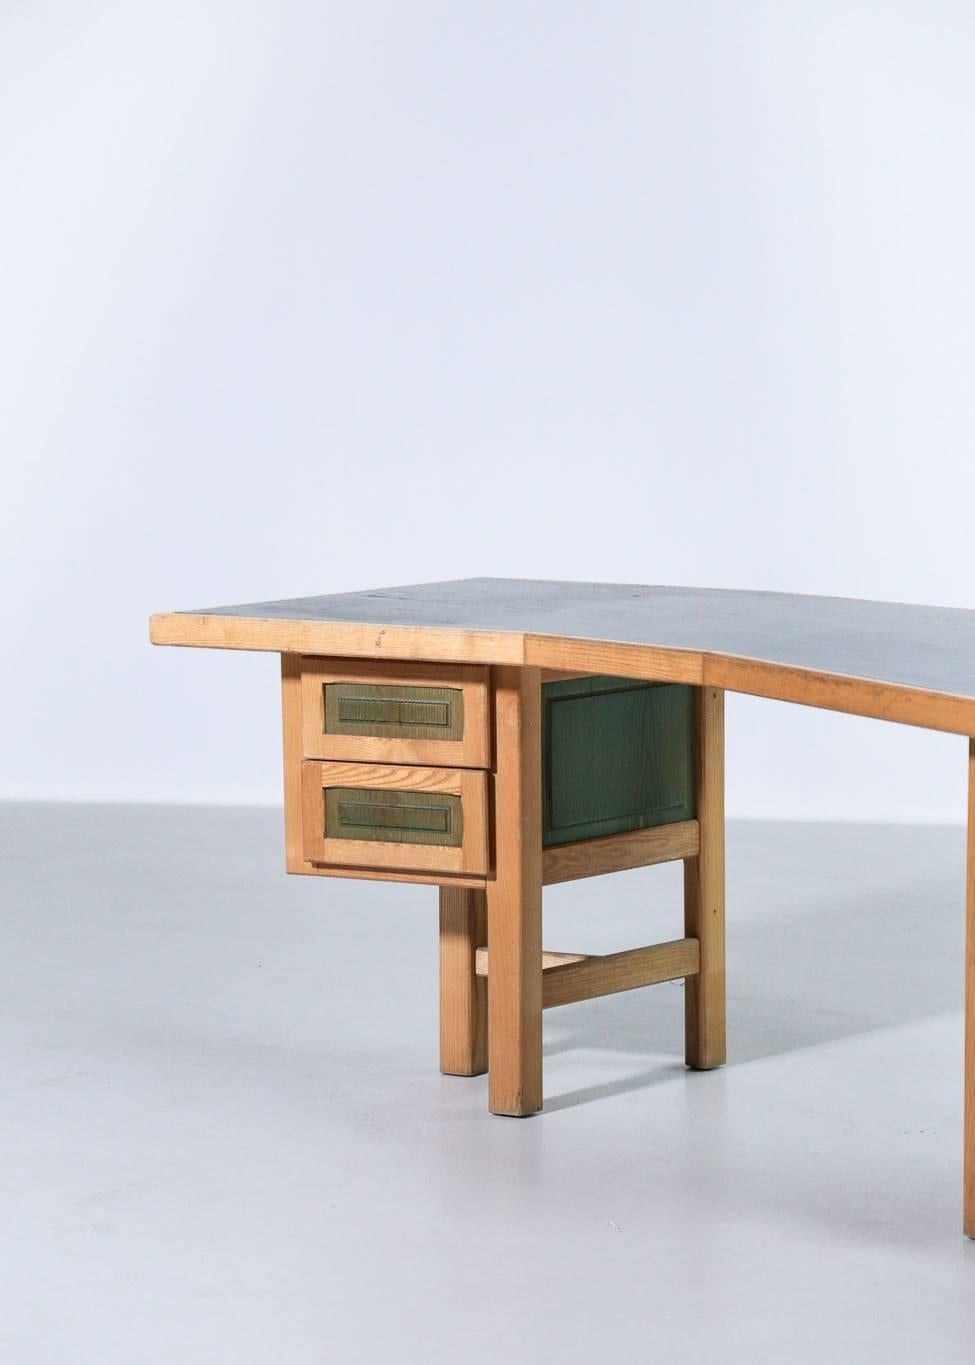 20th Century Unique Modernist Desk, 1970s French Design in the Style of Pierre Chapo